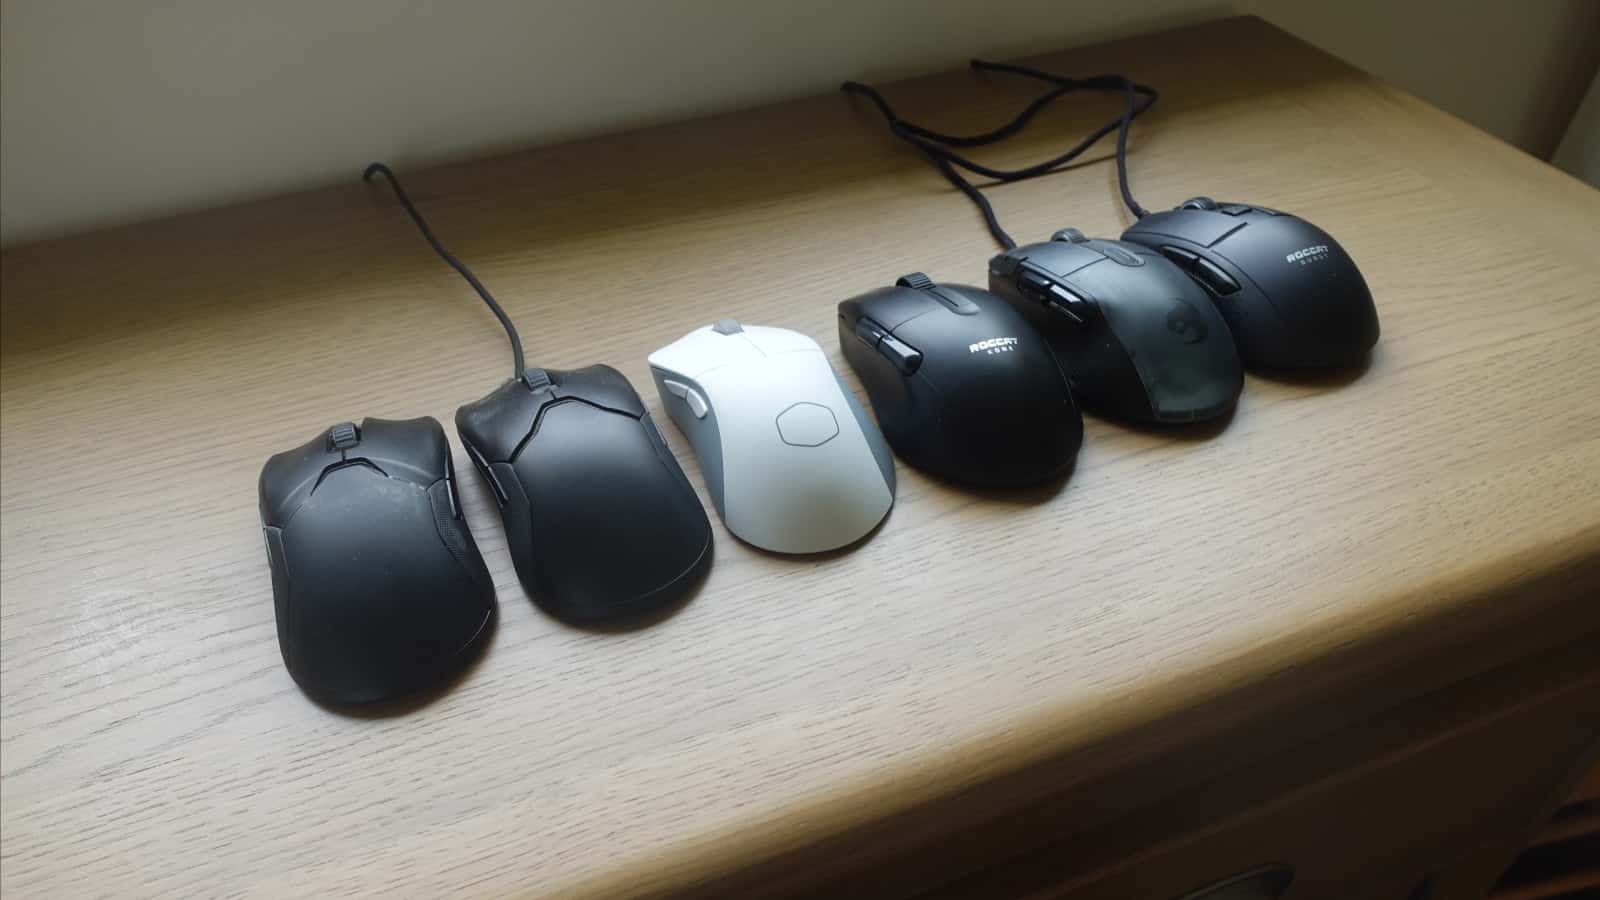 Gaming Mice